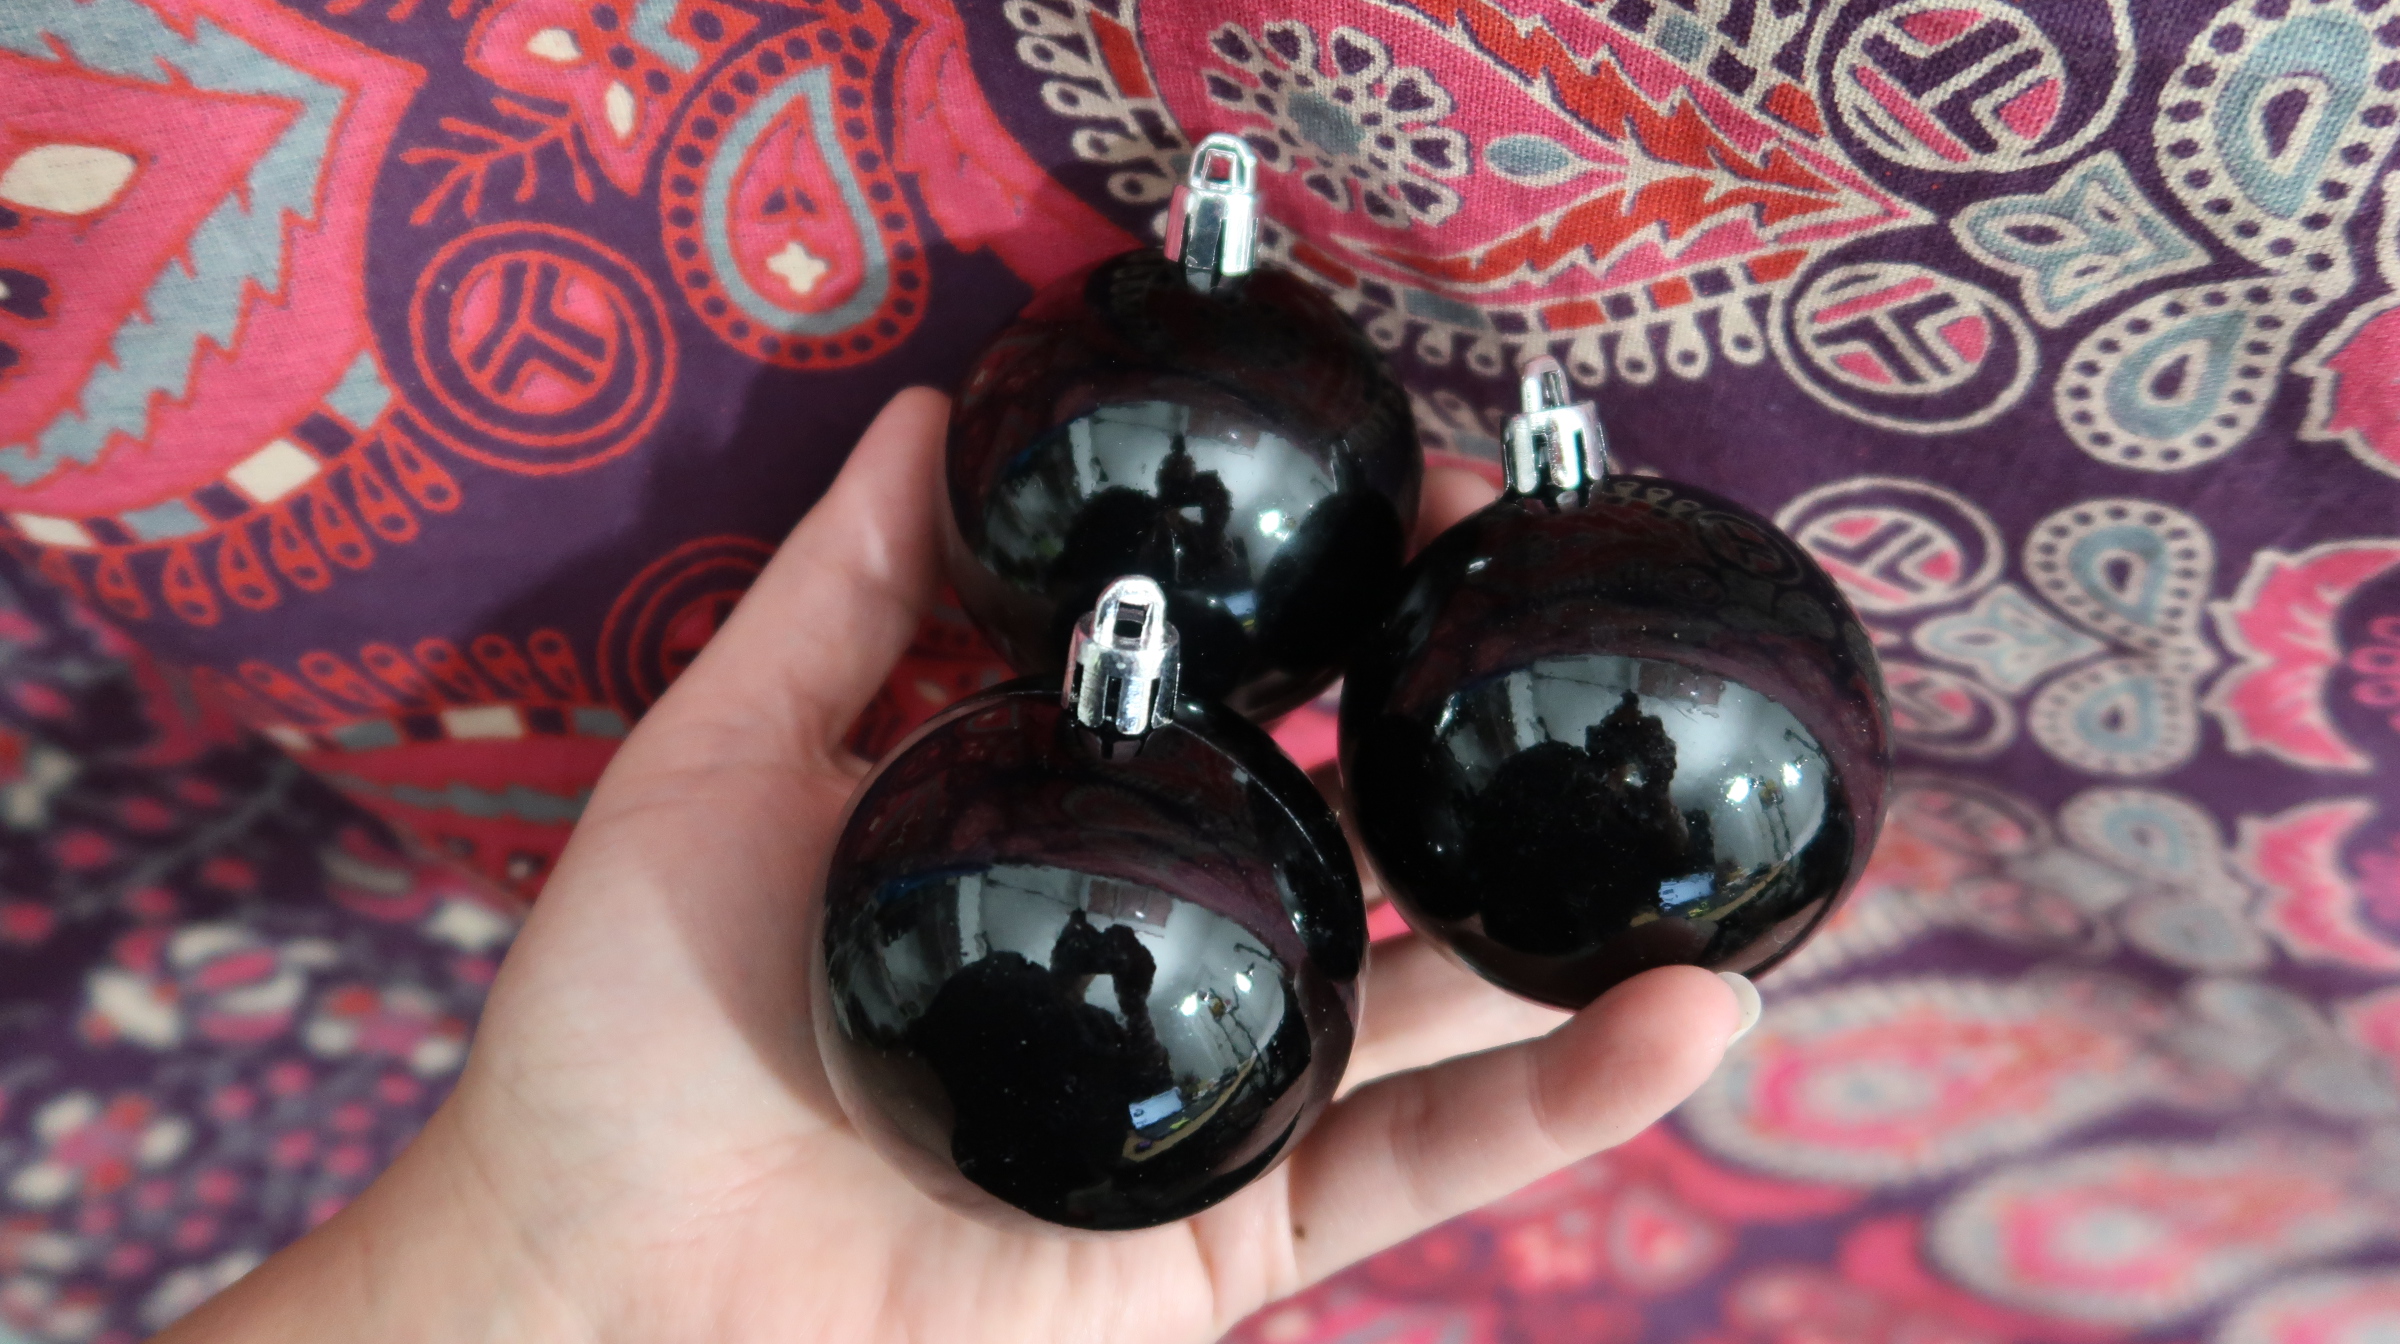 Black, shiny, Christmas ornament balls, dot mandala blank – Dot